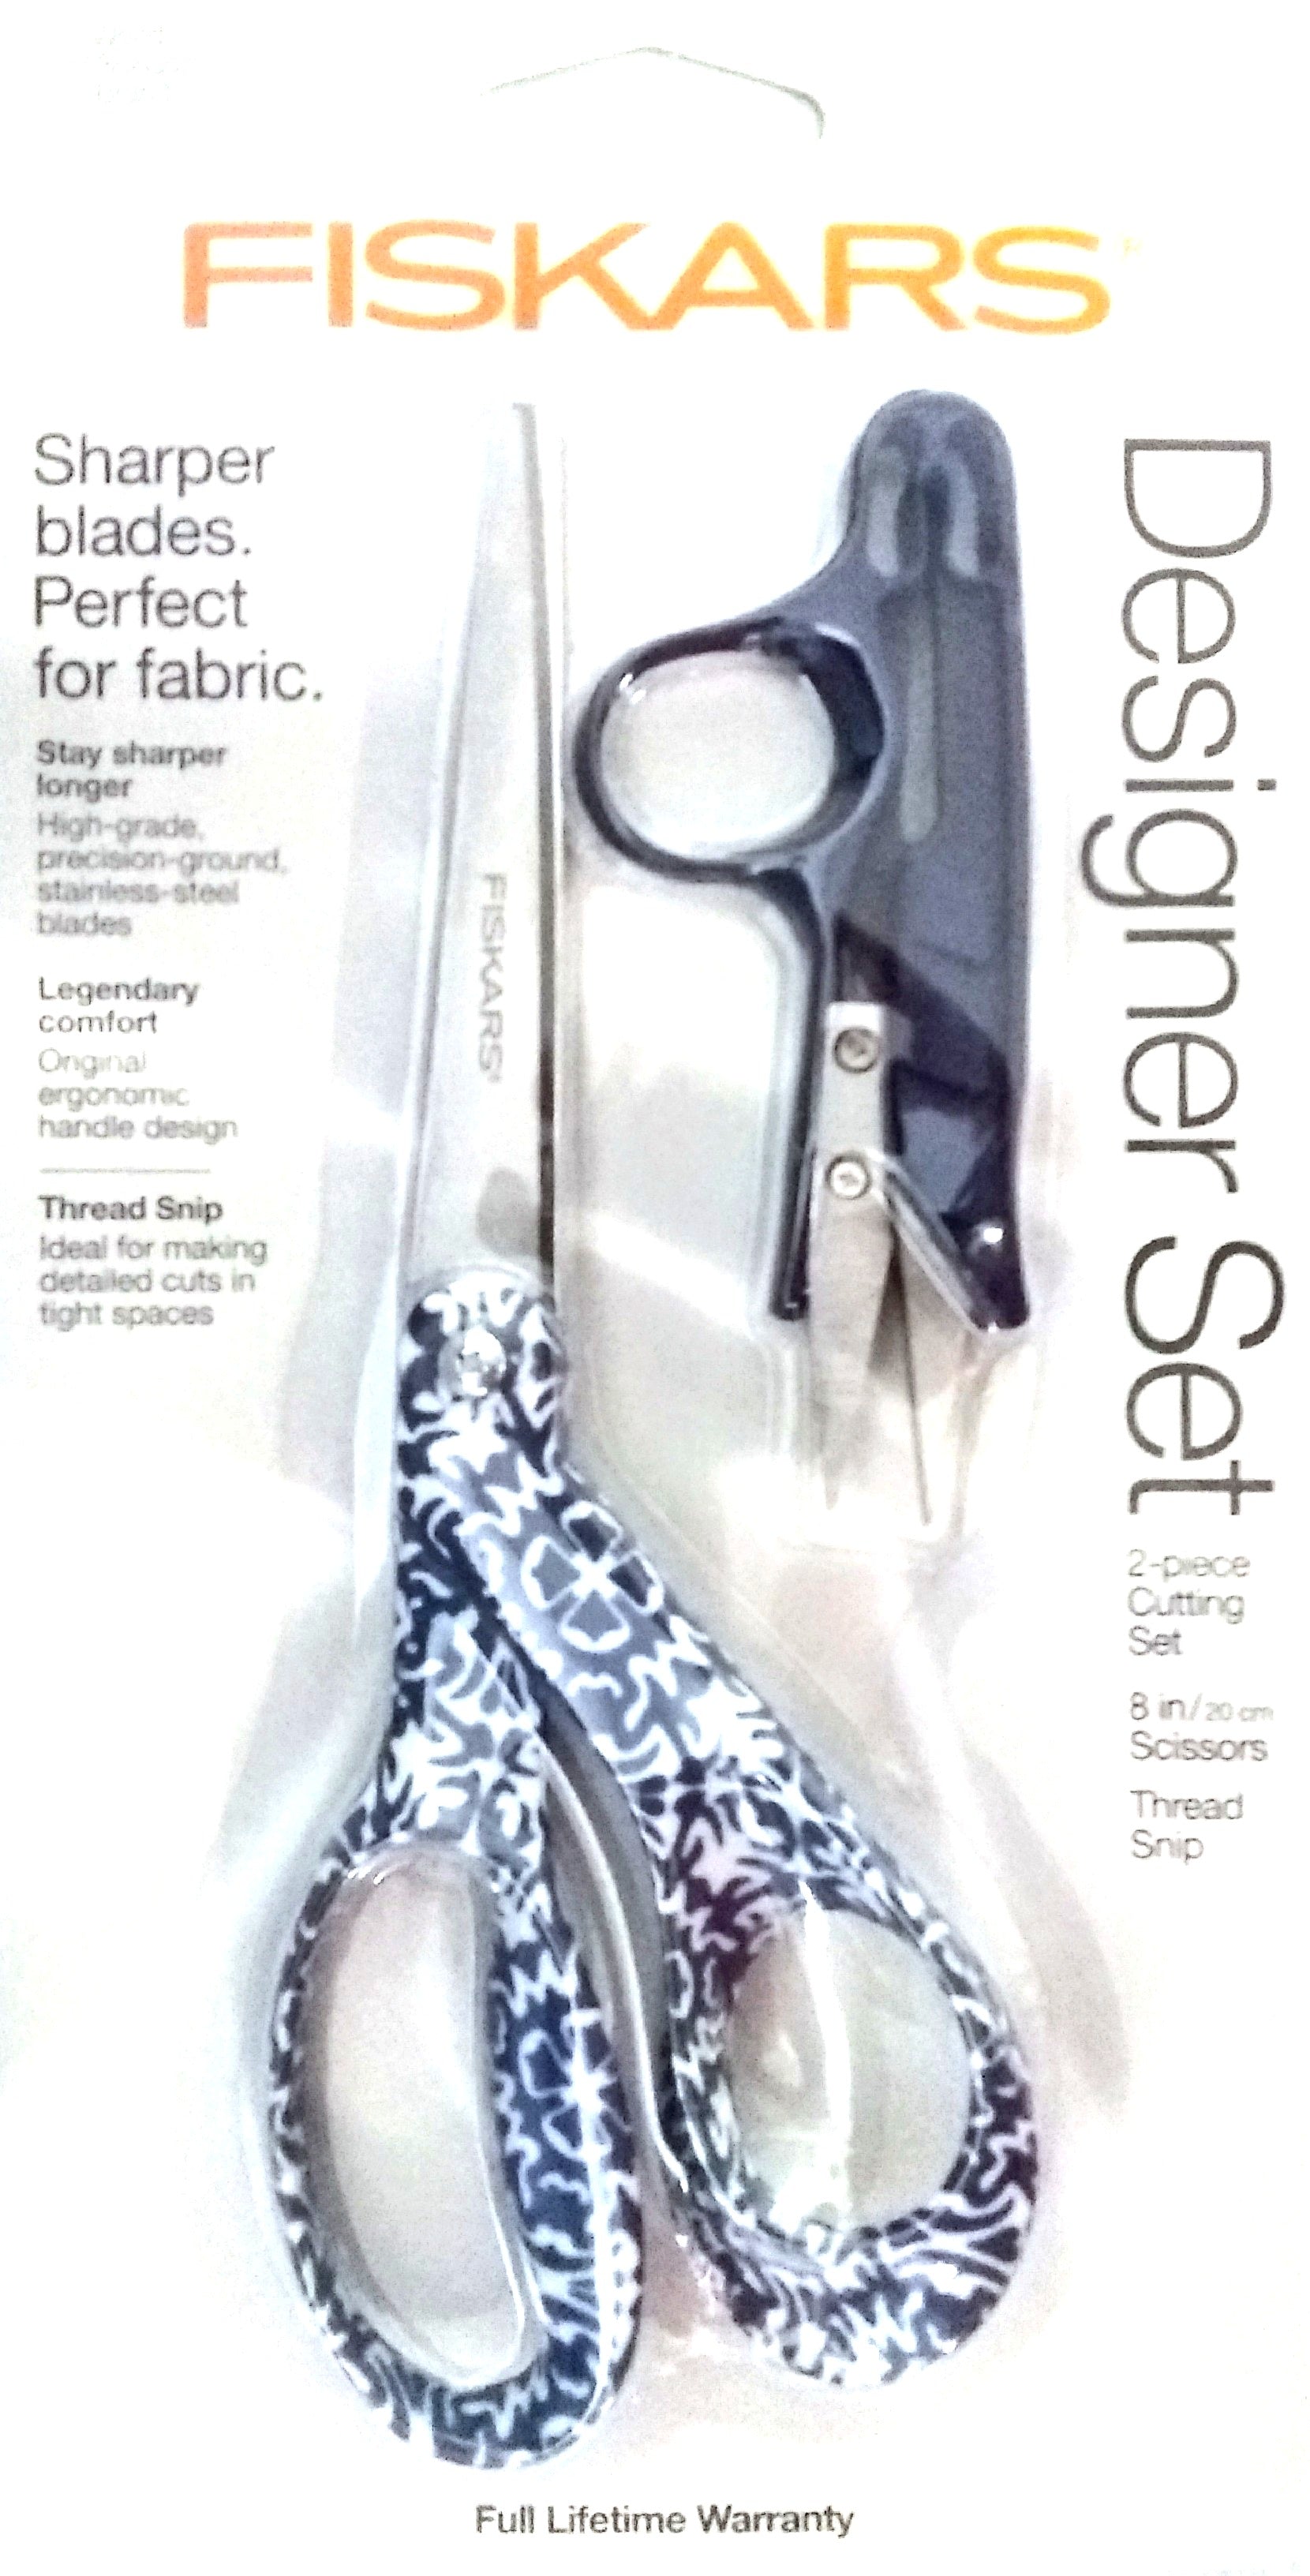 Fiskars 154162 Designer 2pc Cutting Set 8" Scissors & Thread Snip (Asst Color)